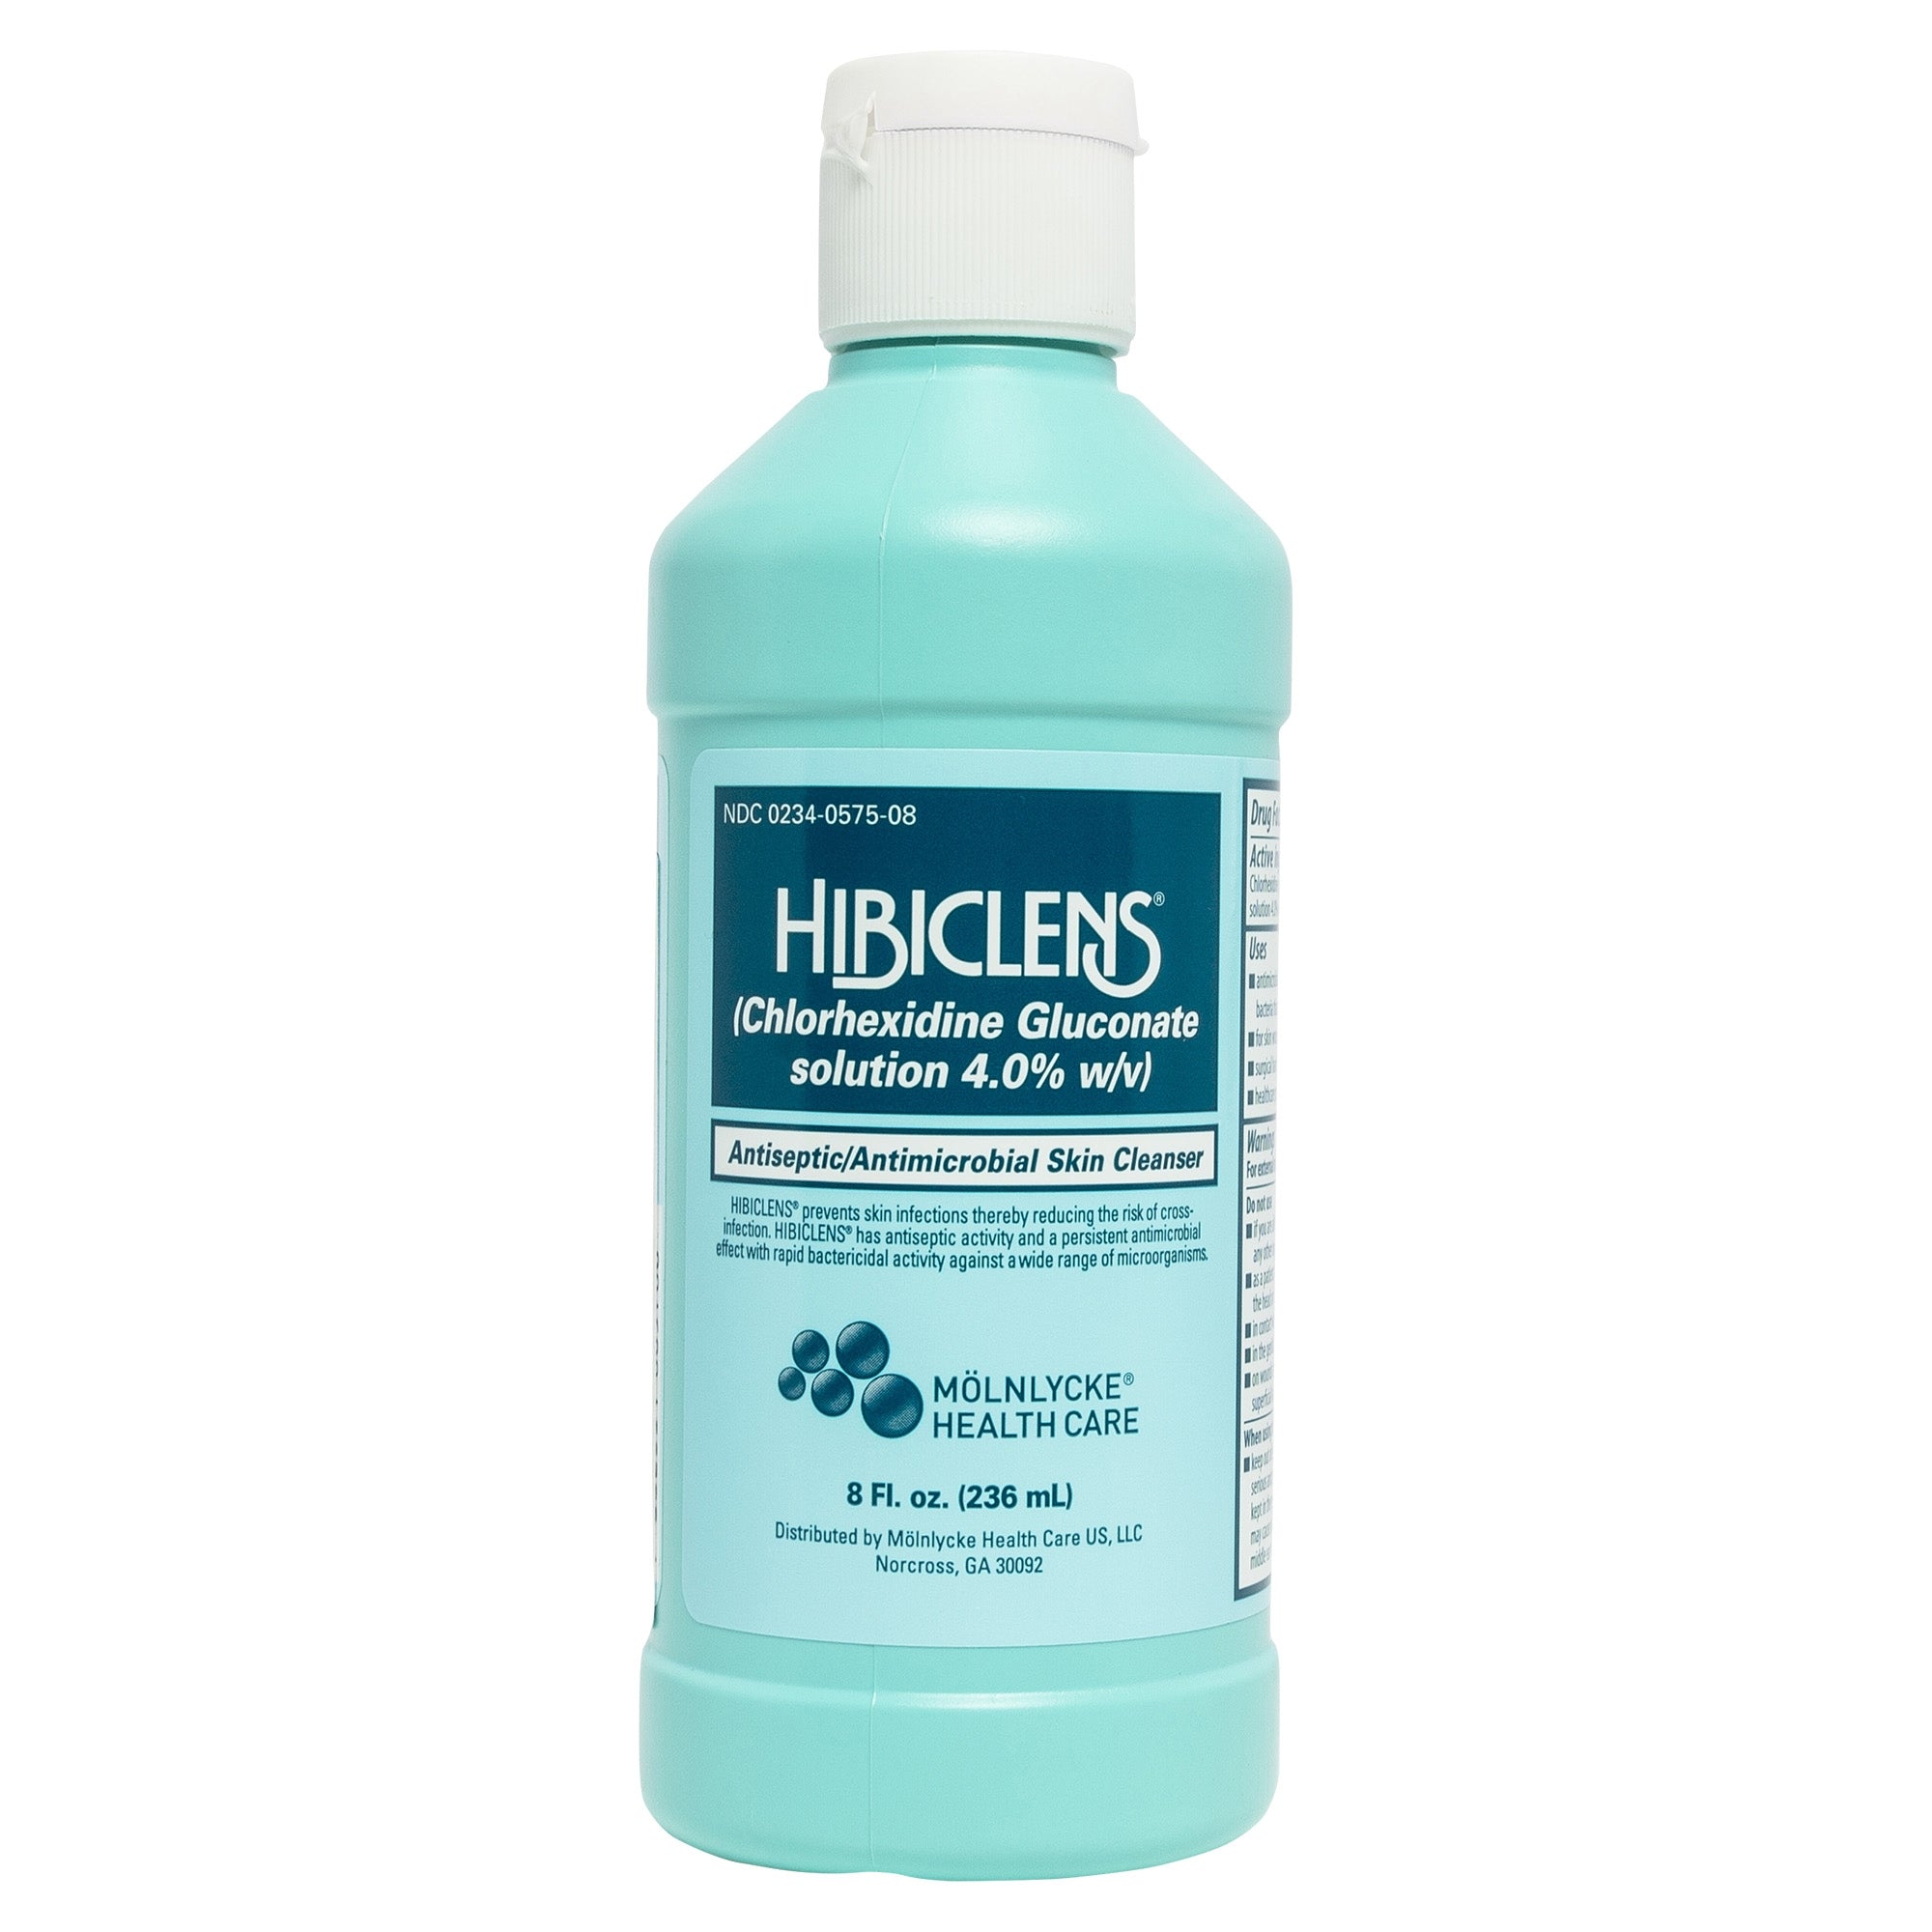 MoInlycke Hibiclens Antiseptic / Antimicrobial Skin Cleanser 57508 - 4% Strength CHG (Chlorhexidine Gluconate), NonSterile, Liquid, Bottle - 8 oz., Pack of 3